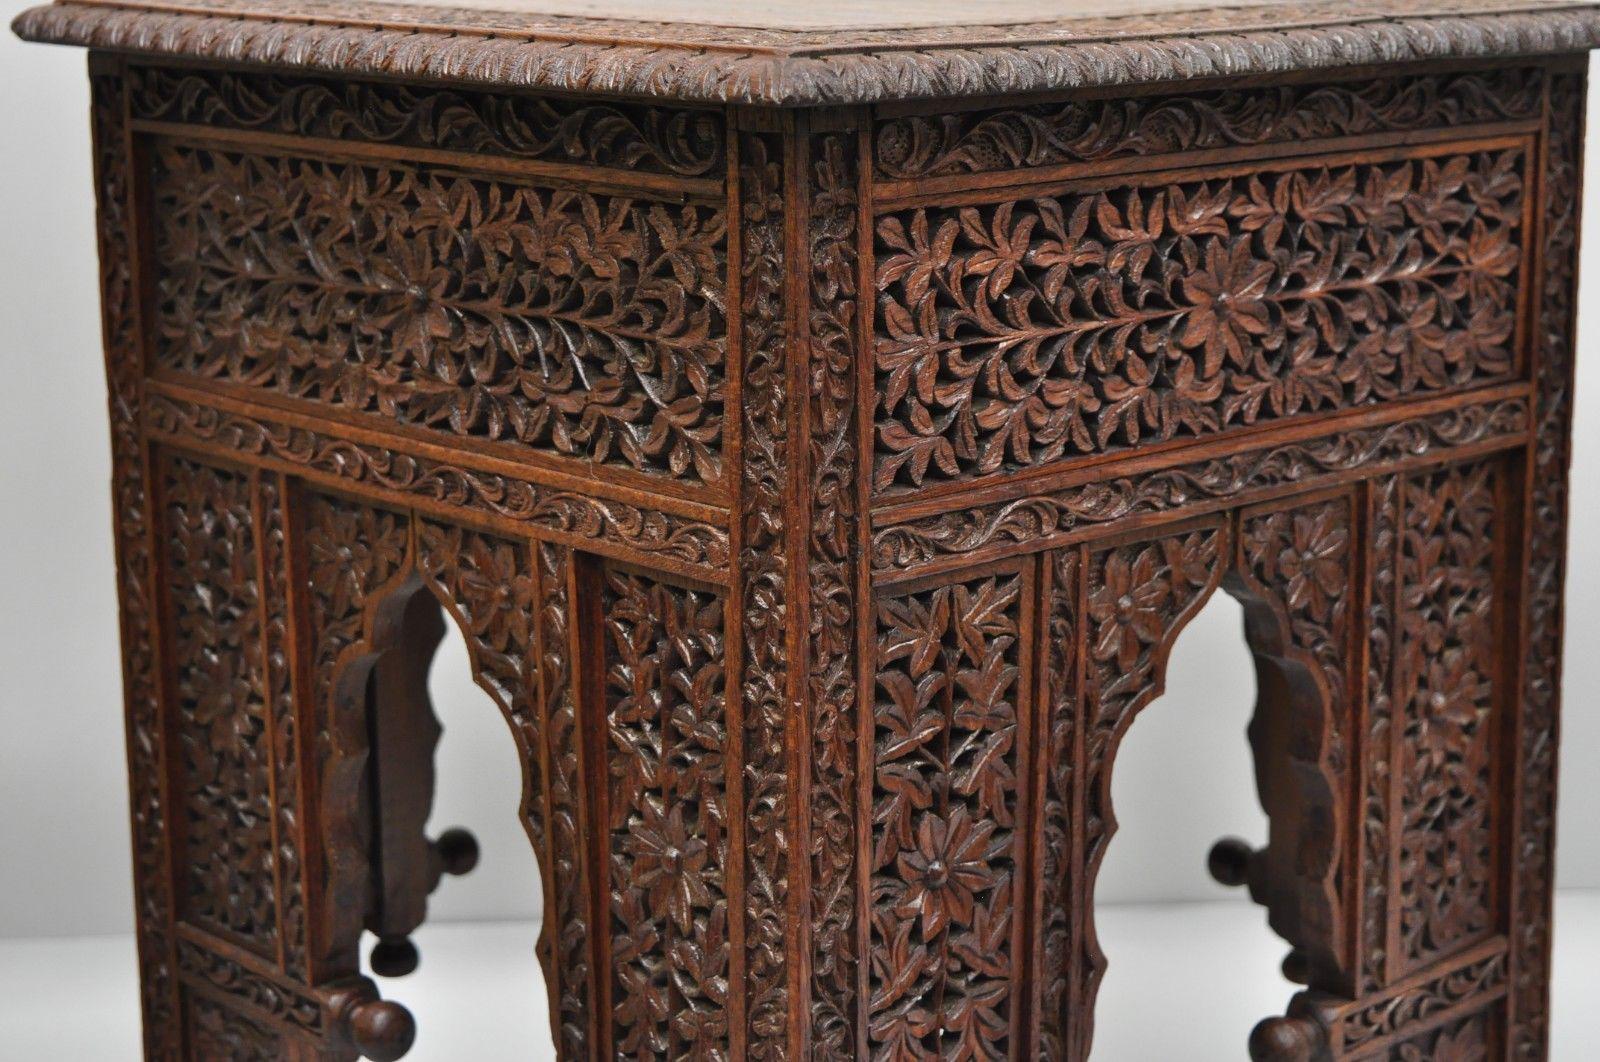 Asian Pierce Carved Teak Wood Moroccan Moorish Accent Side Table Stool Boho Chic